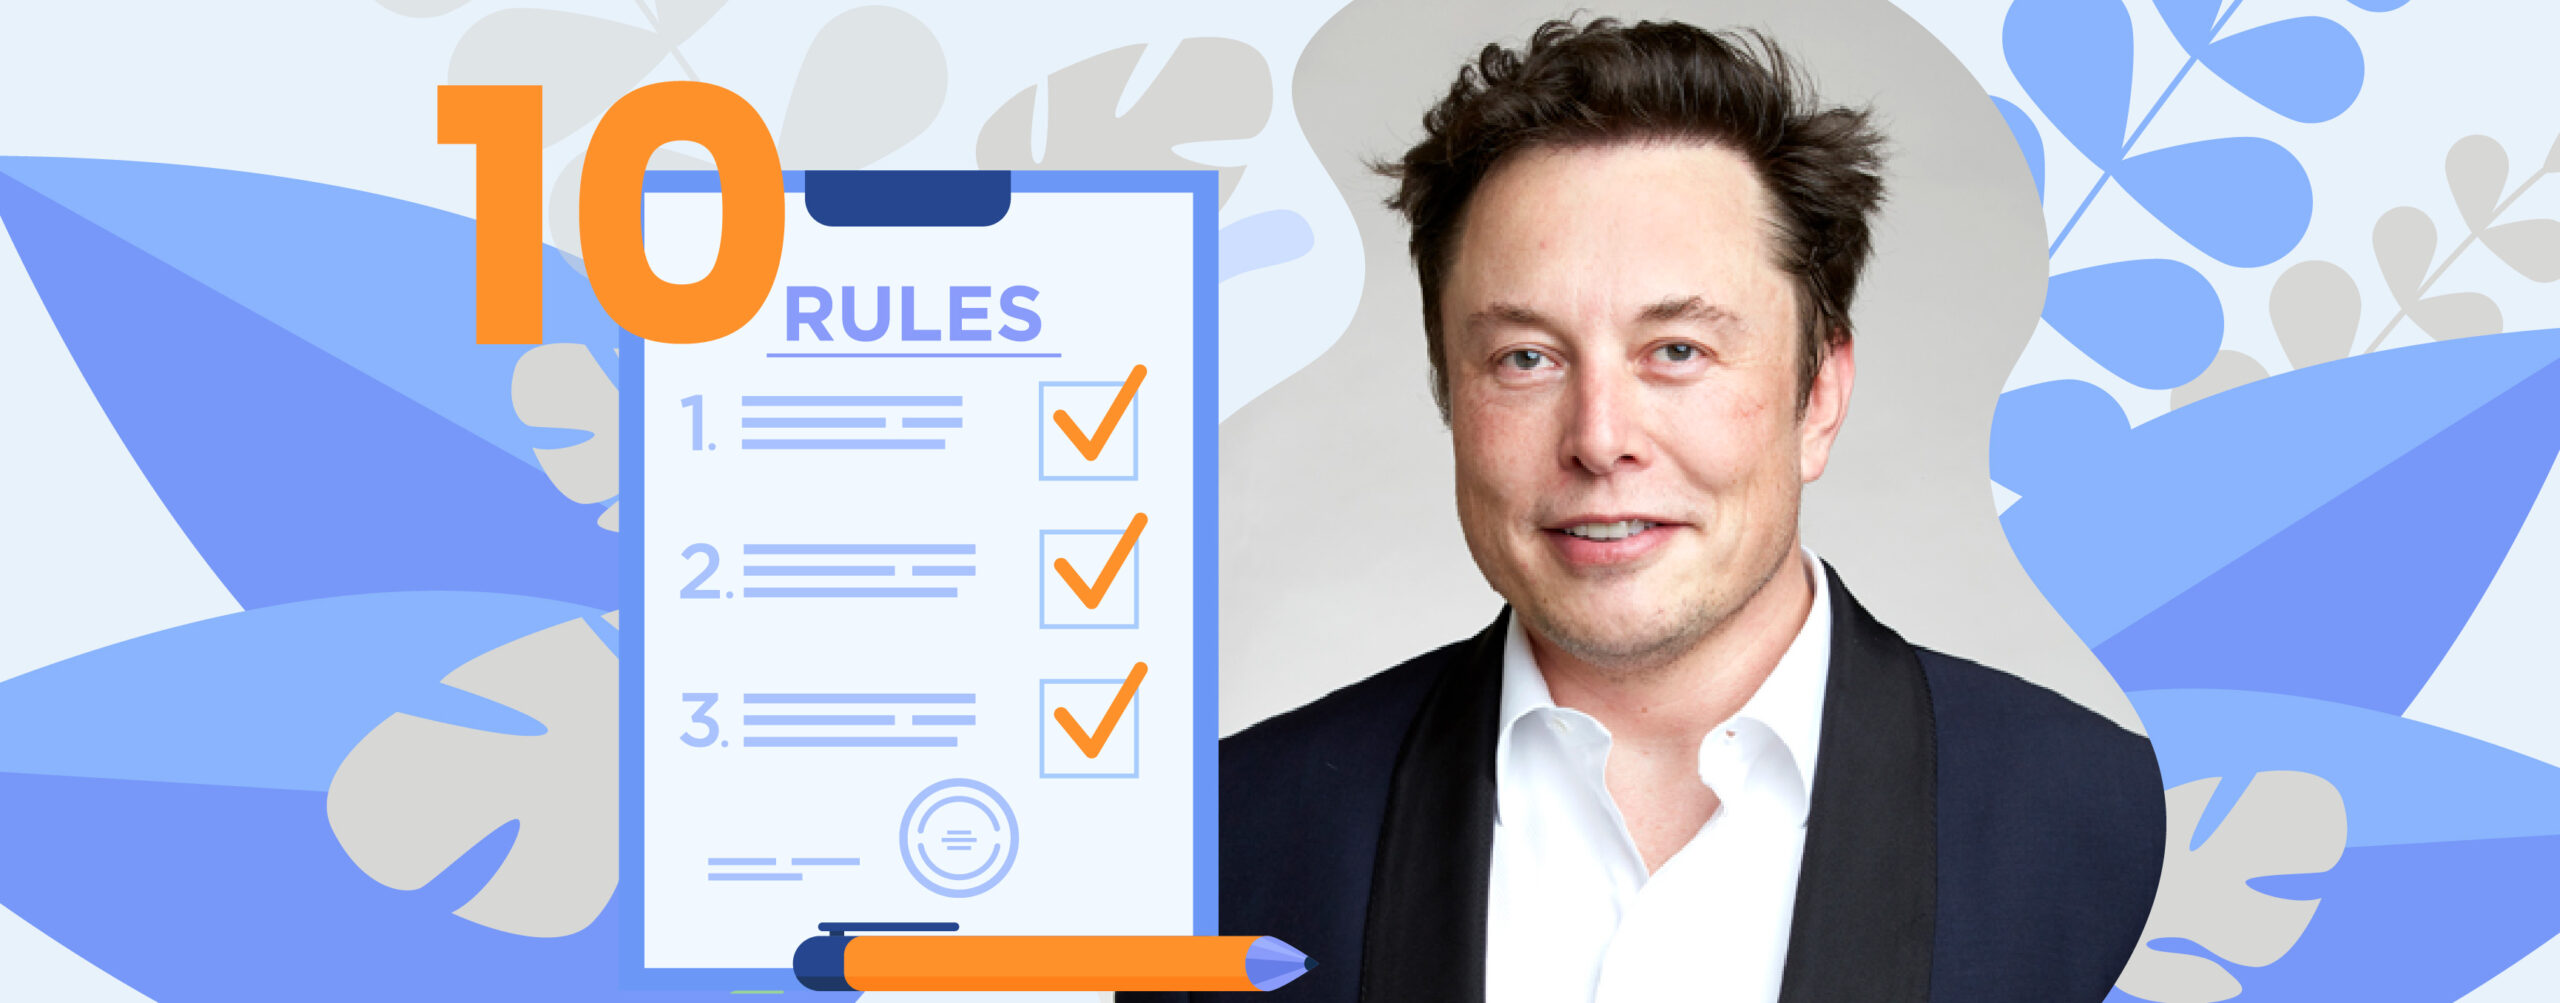 10 zasad sukcesu wg. Elona Muska